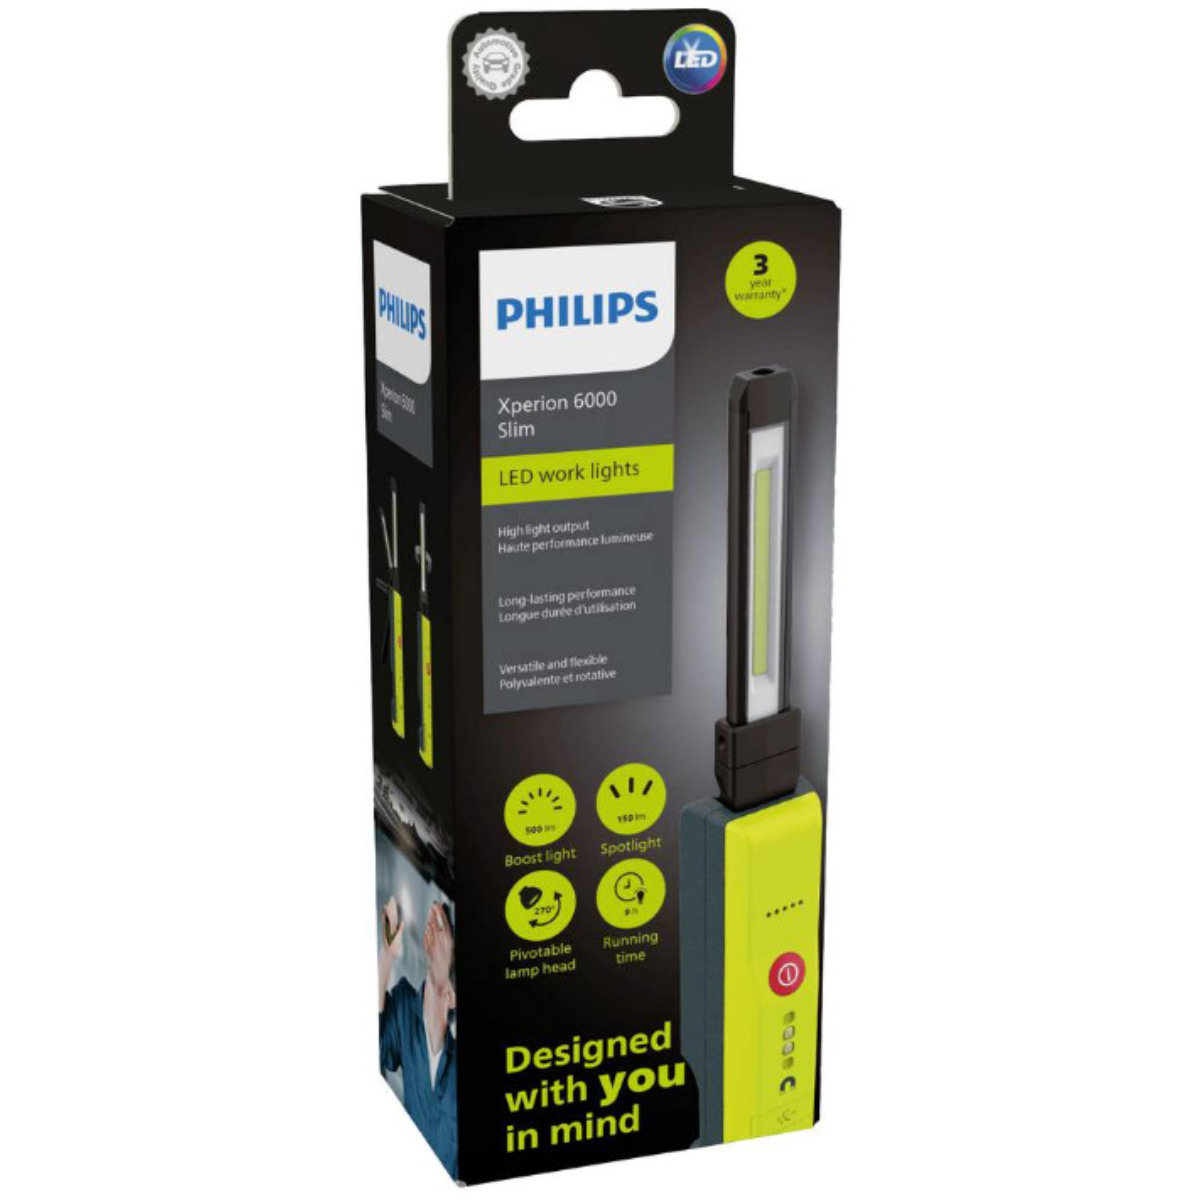 Dag telegram Kakadu Philips Xperion 6000 Slim LED Werklamp X60SLIMX1 | LED Werkverlichting |  Vehicle Equipment Online Store